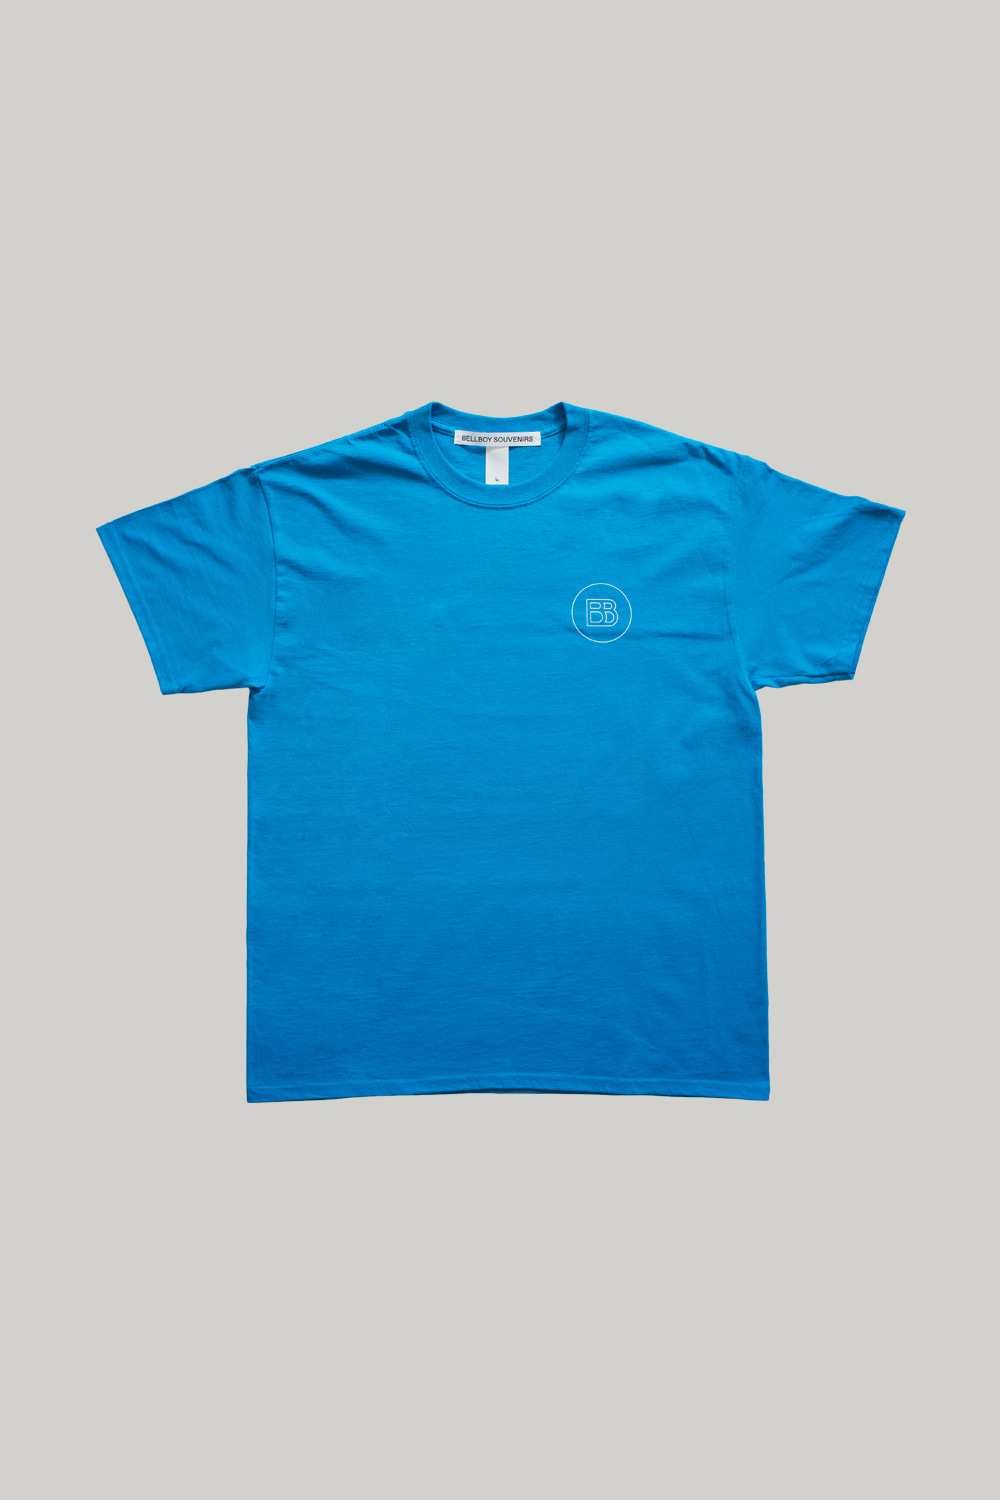 BB T-Shirts - Sapphire 티셔츠, 워시드 헤비웨이트 티셔츠, 옥스포드셔츠, 버튼다운셔츠, 메신저백, 캔버스백